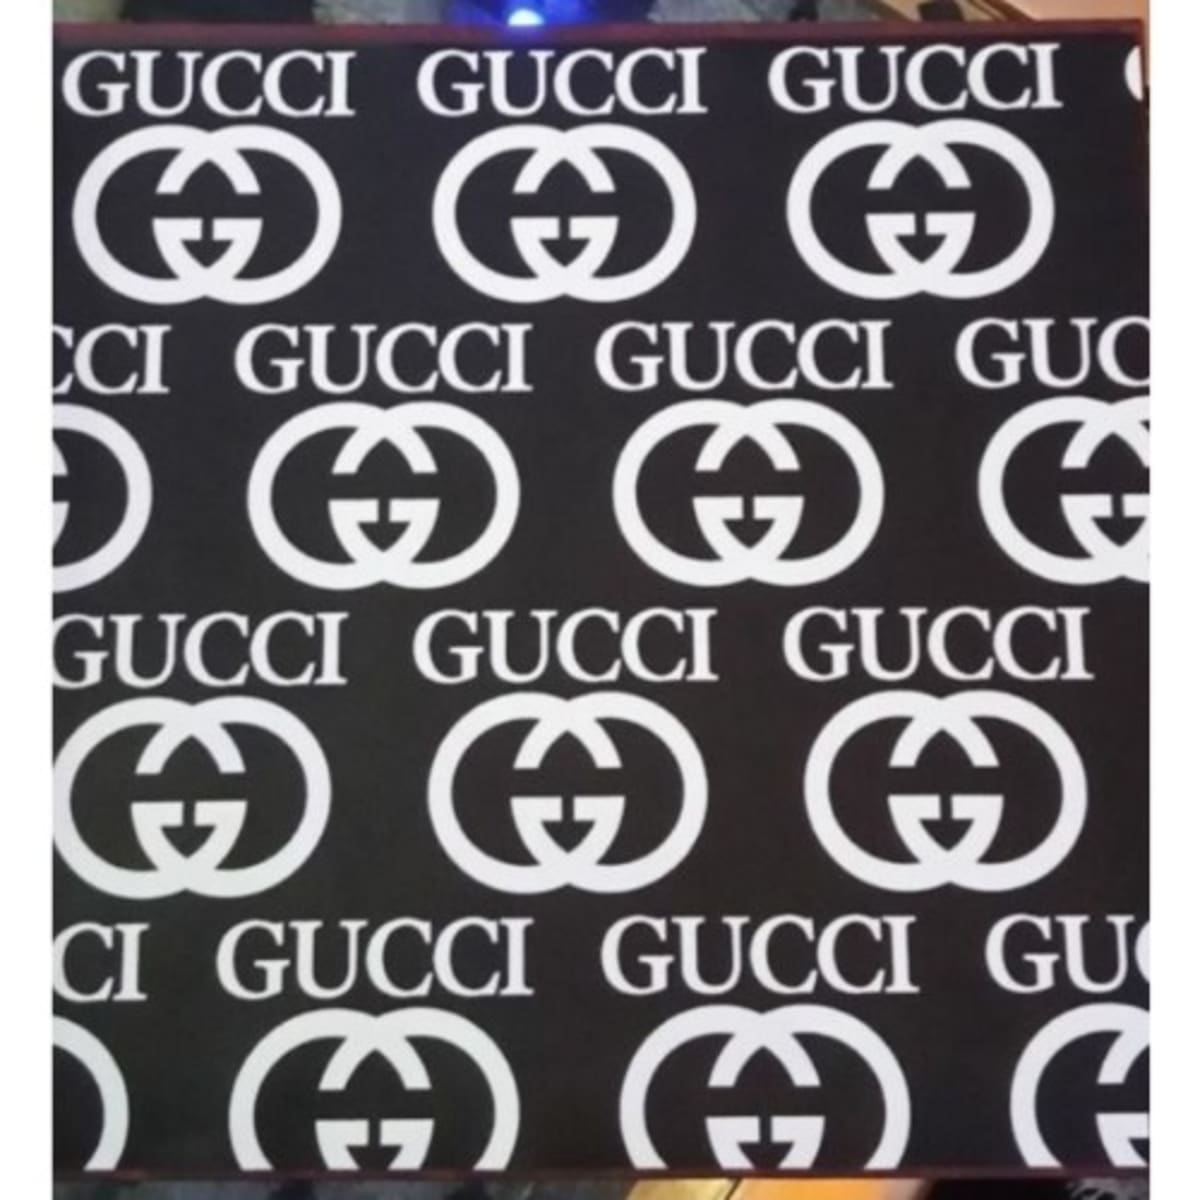 Download Gucci Wallpapers, Gucci Wallpapers, Gucci Wallpapers, Gucci  Wallpapers, Gucci Wallpapers, Gu Wallpaper